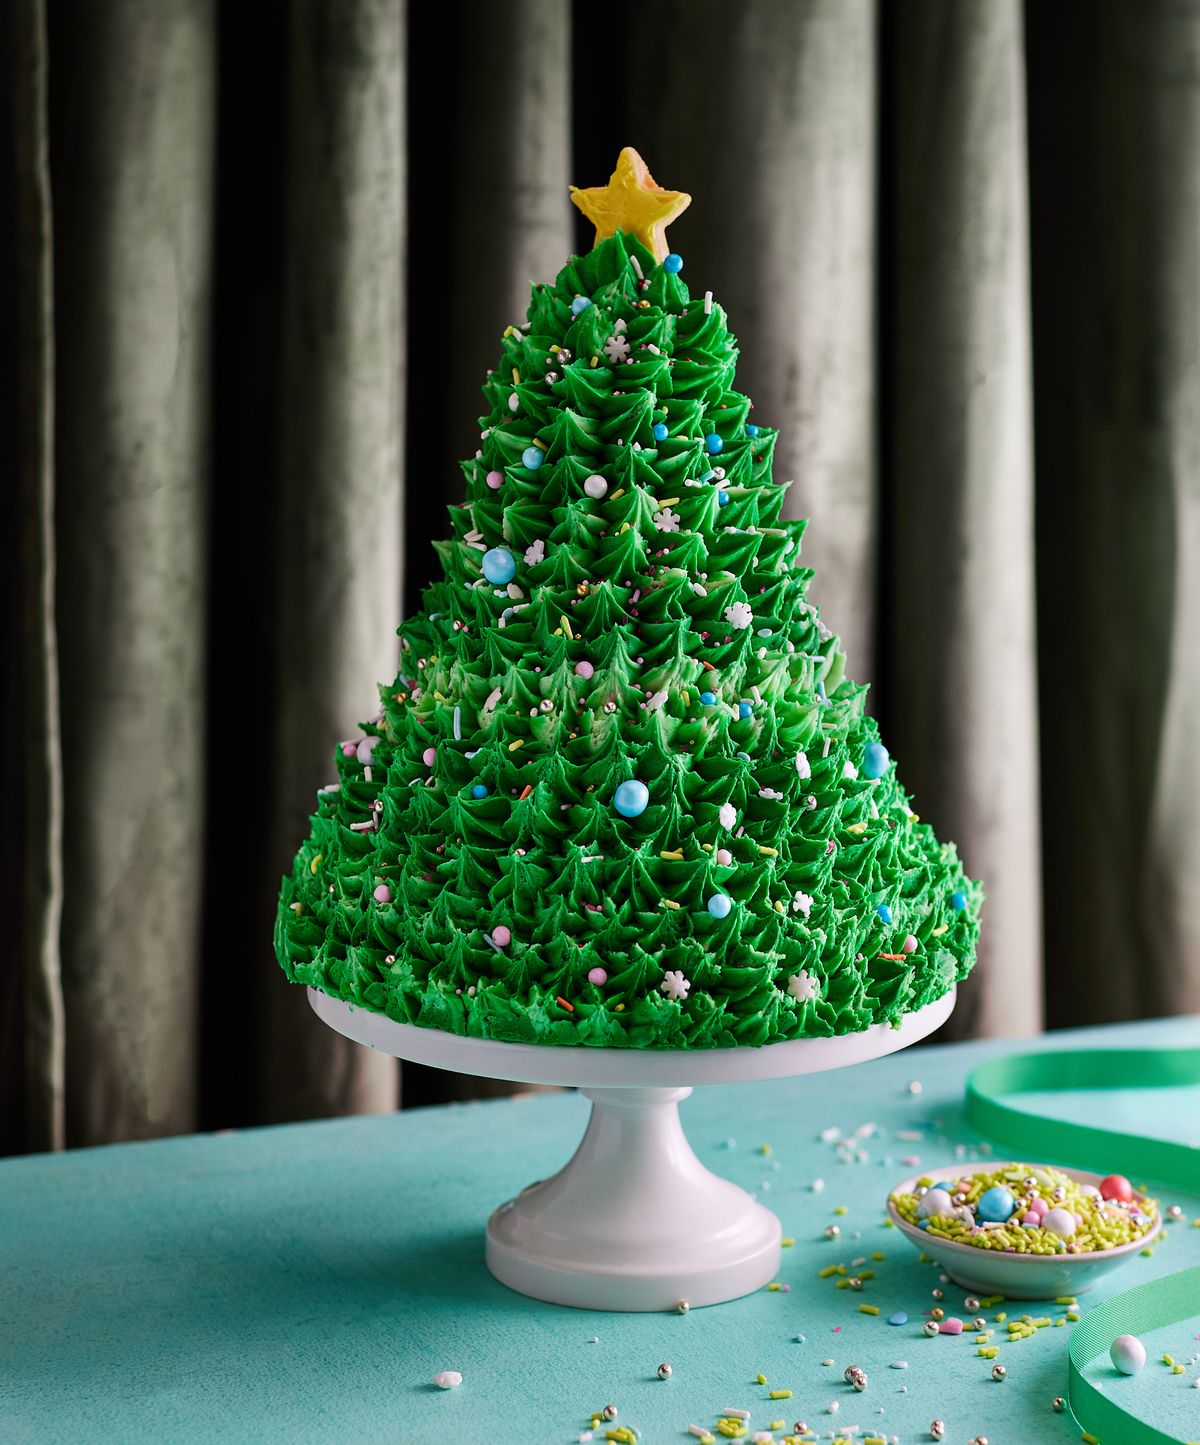 Best Christmas Tree Cake Recipe - How to Make A Christmas Tree Cake